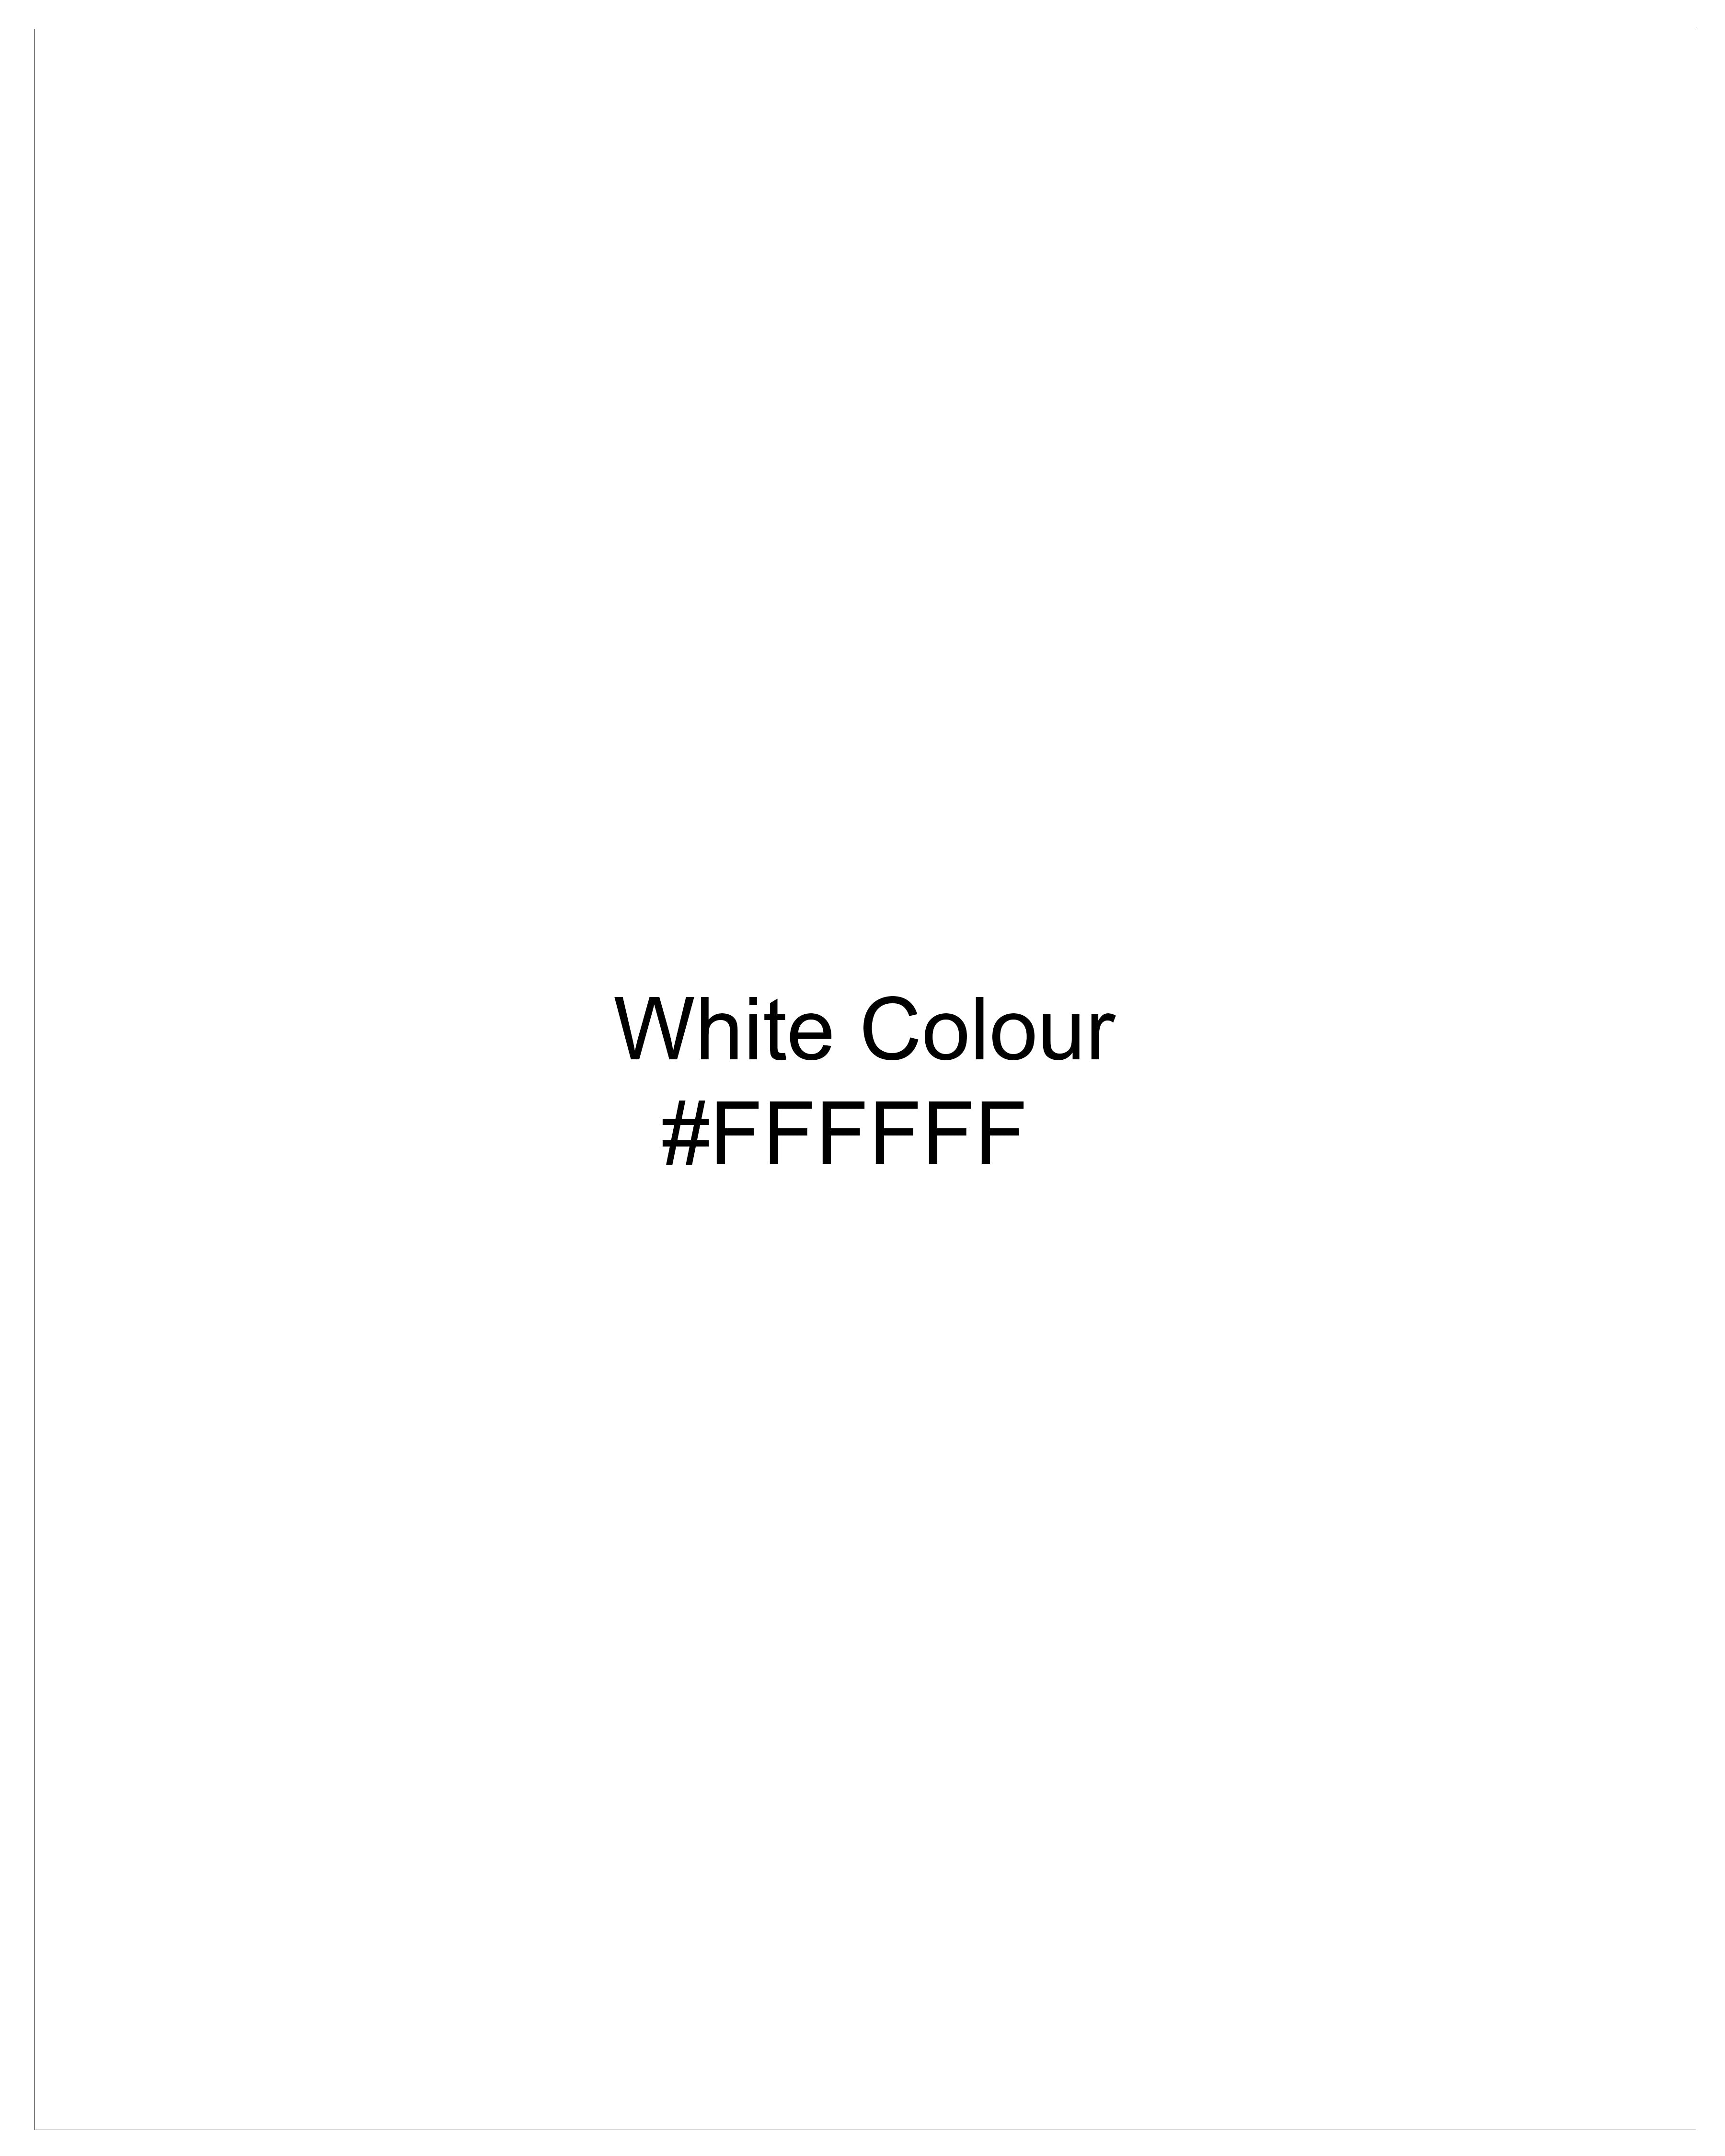 Bright White Premium Cotton T-shirt TS854-S, TS854-M, TS854-L, TS854-XL, TS854-XXL